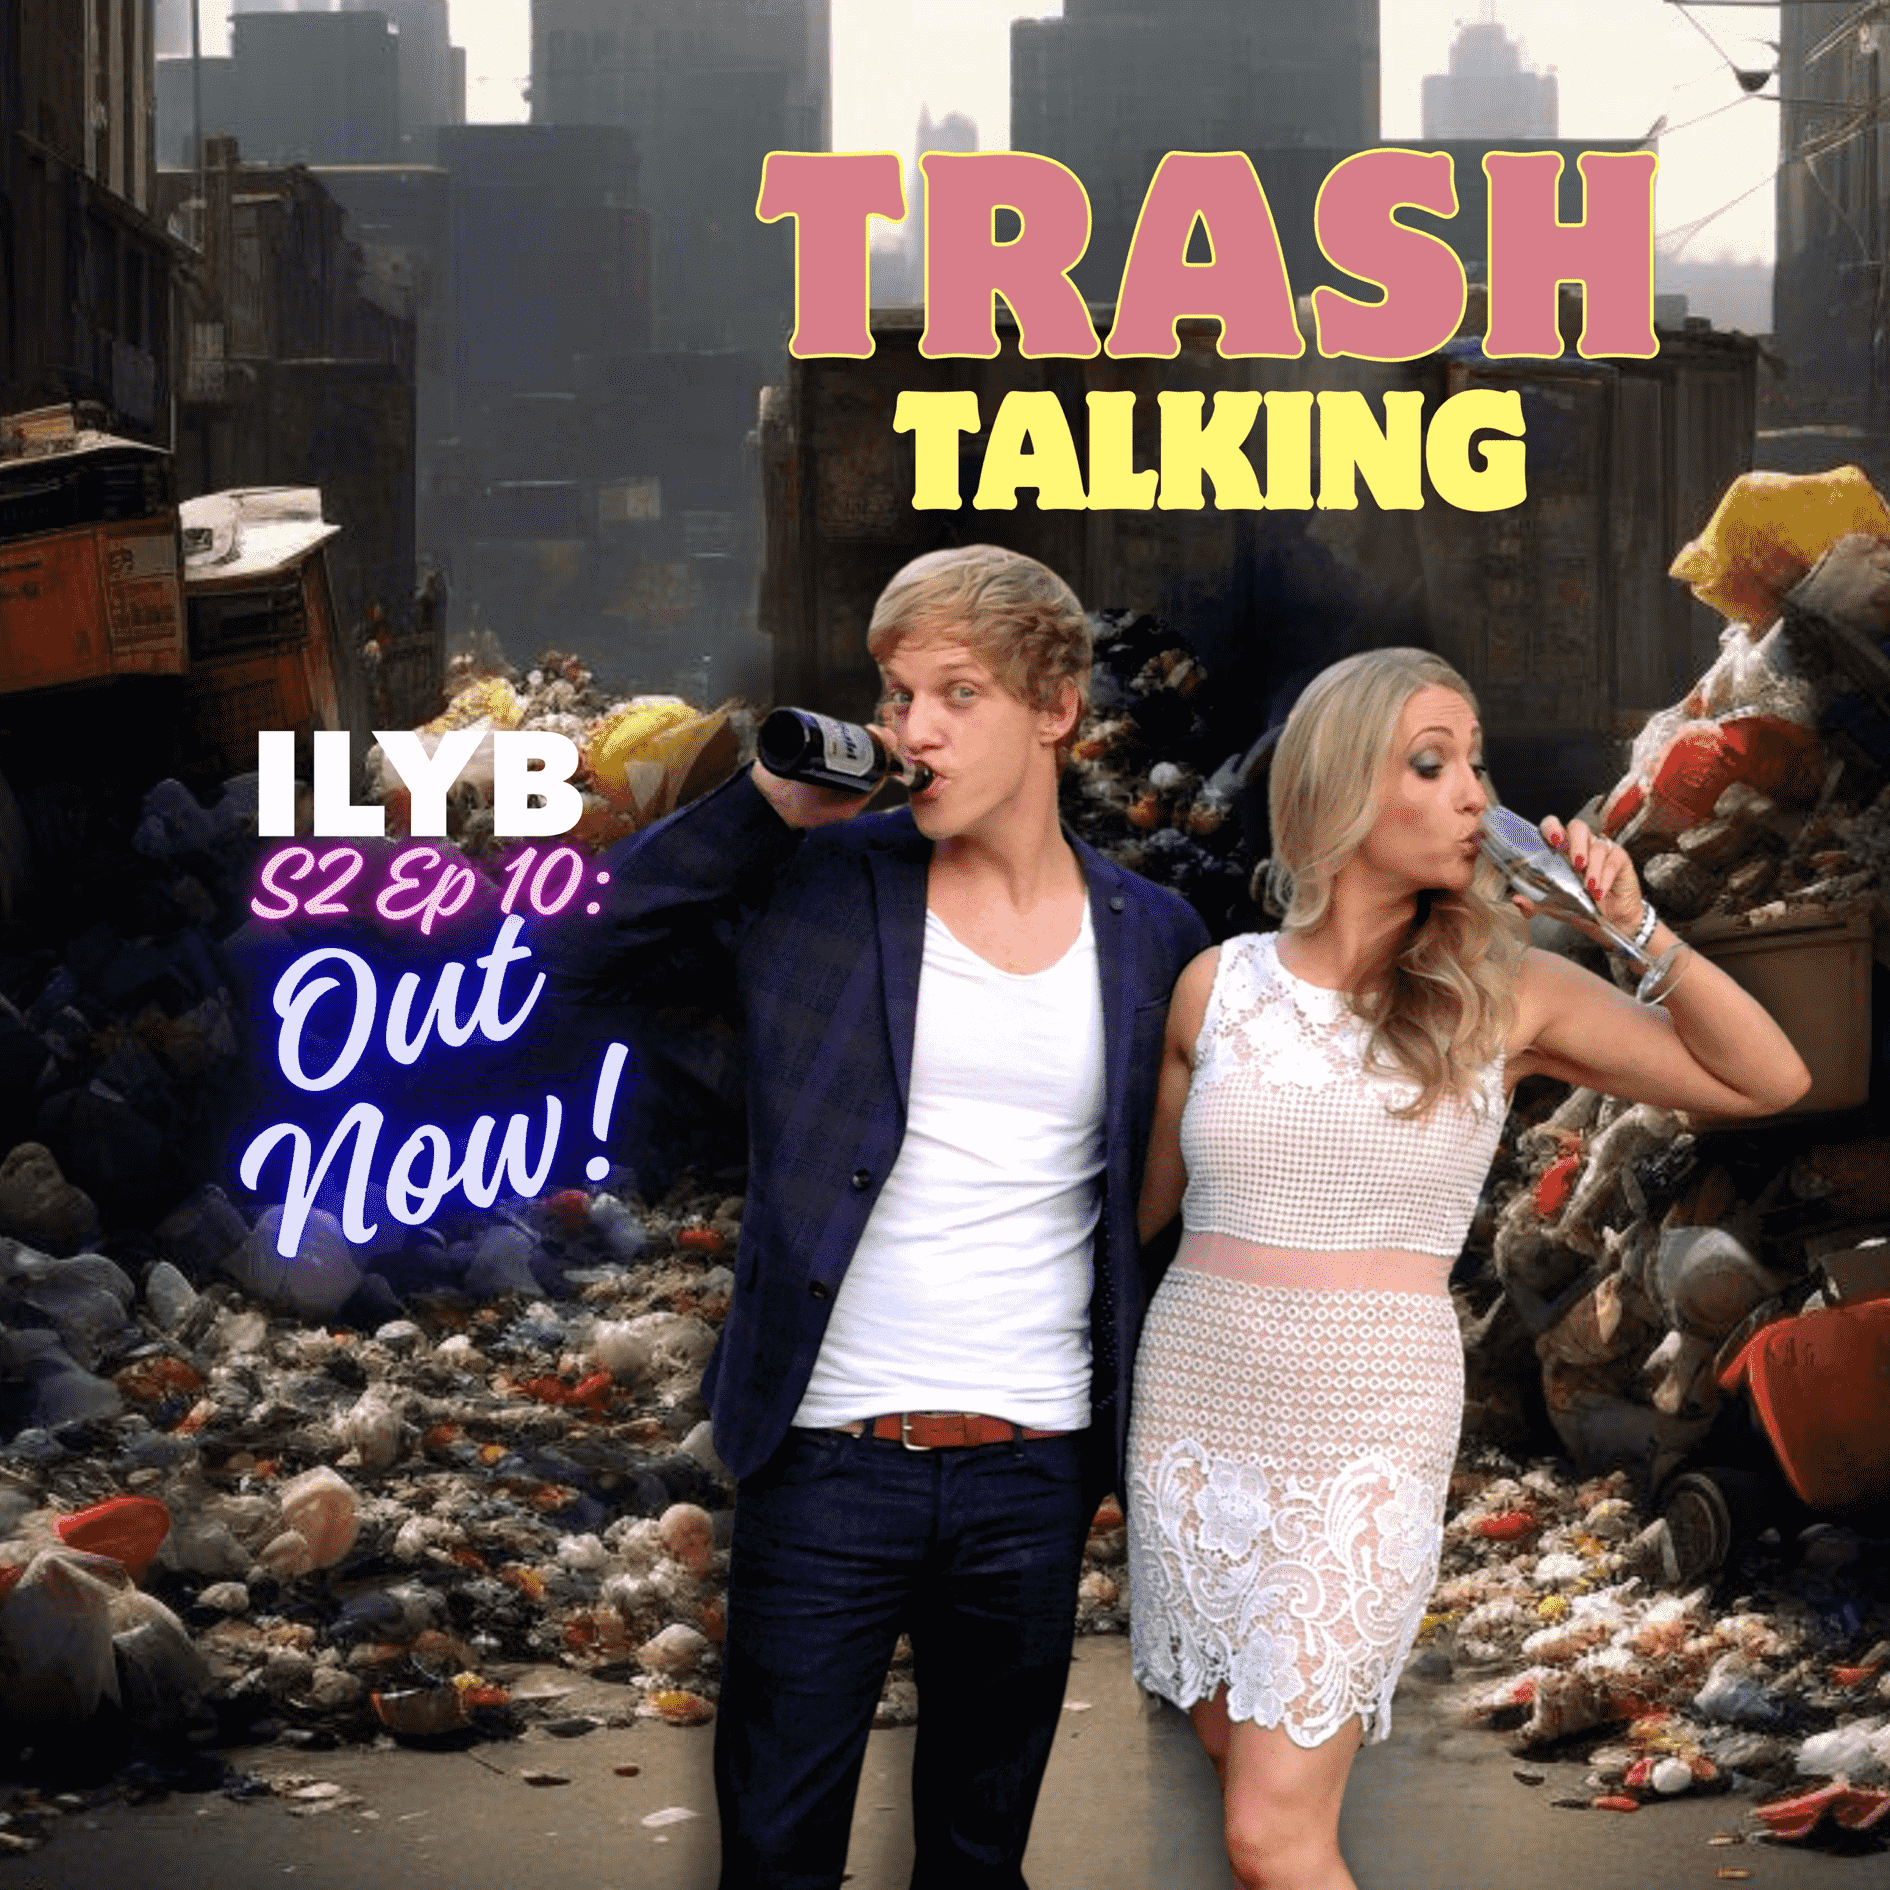 Trash-Talking